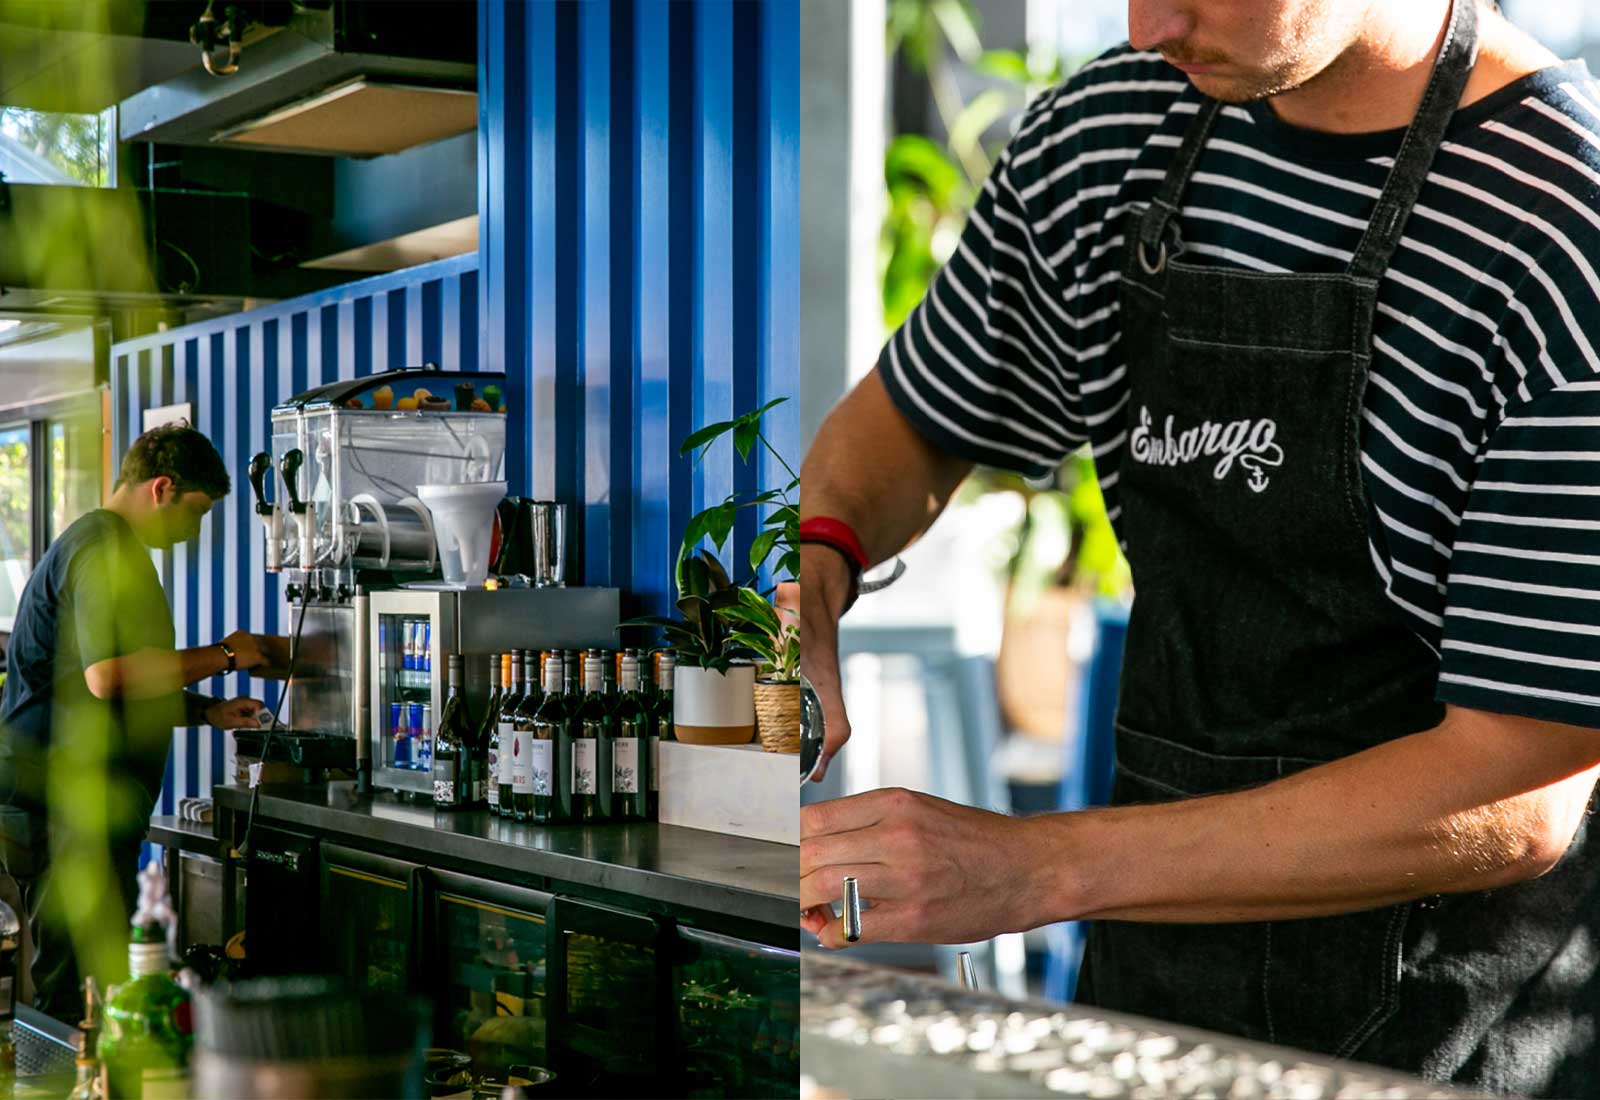 Bartender mixes cocktails at Embargo bar wearing an Embargo branded staff uniform featuring the Embargo logo design